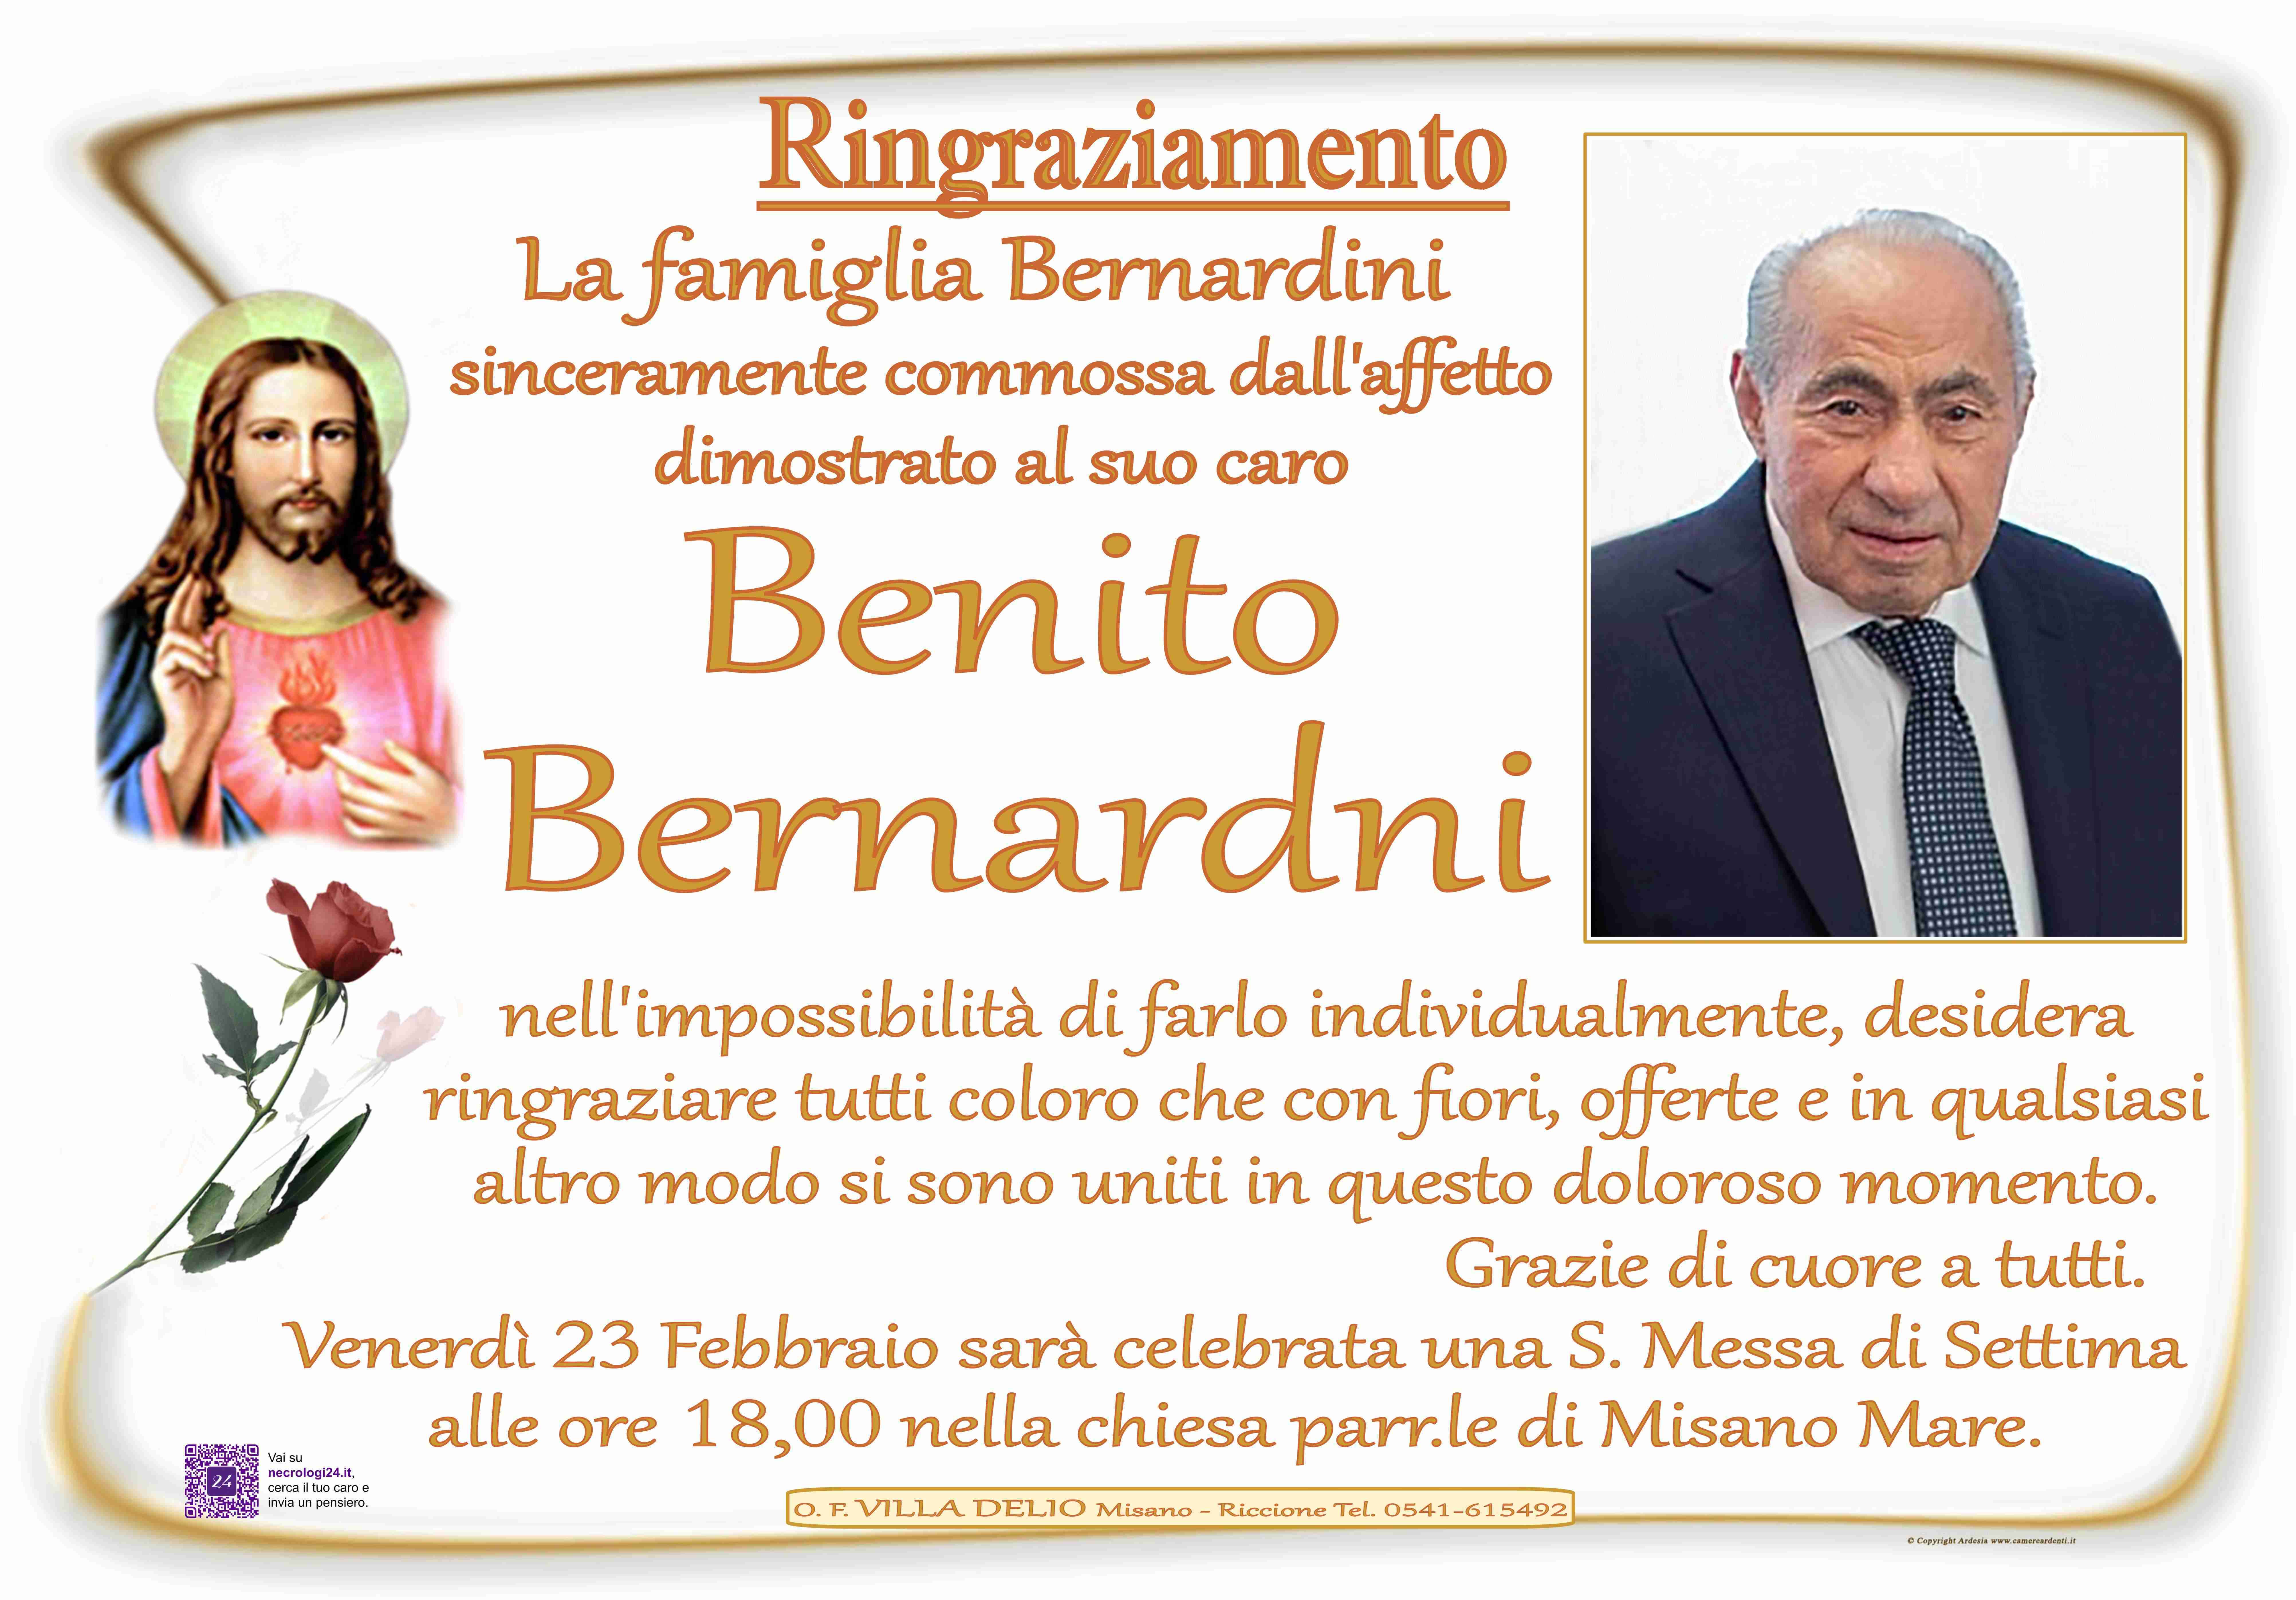 Benito Bernardini